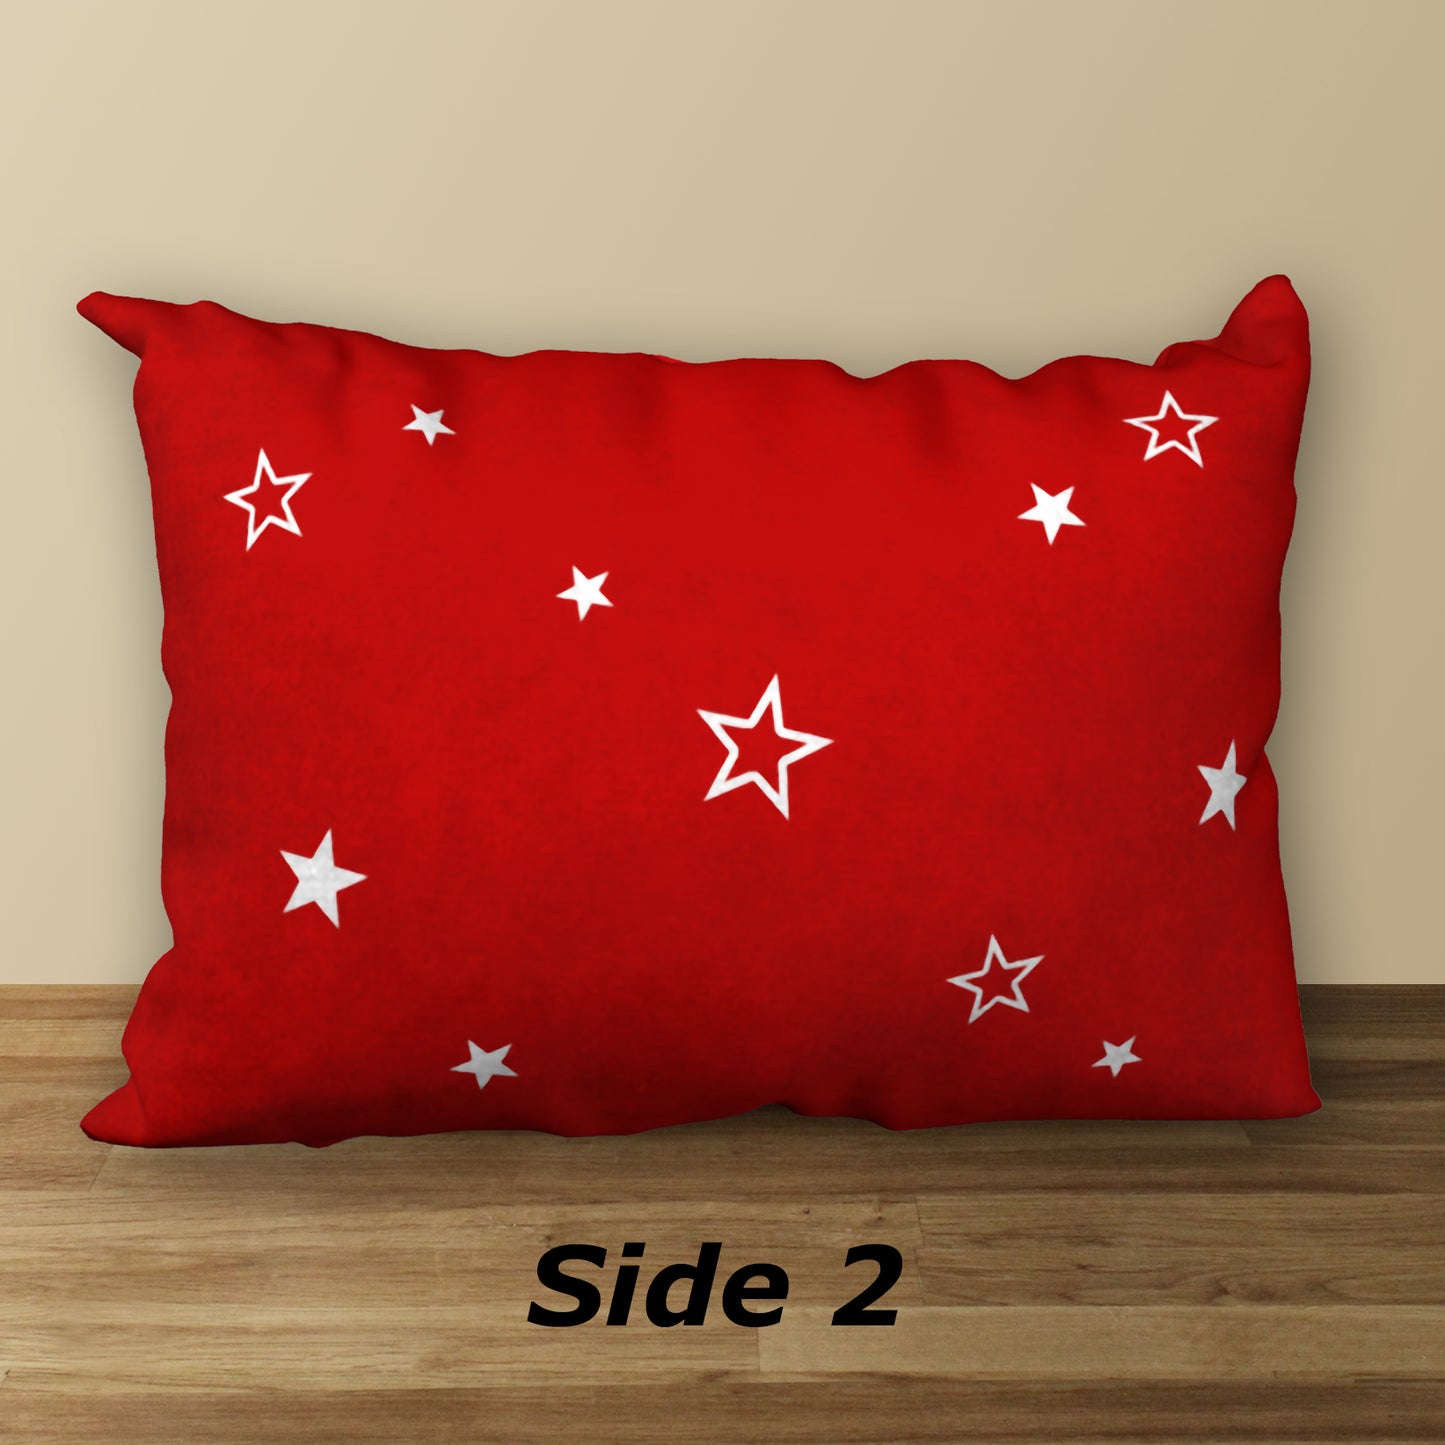 BELIEVE Designer Holiday Pillow, 20"x14"